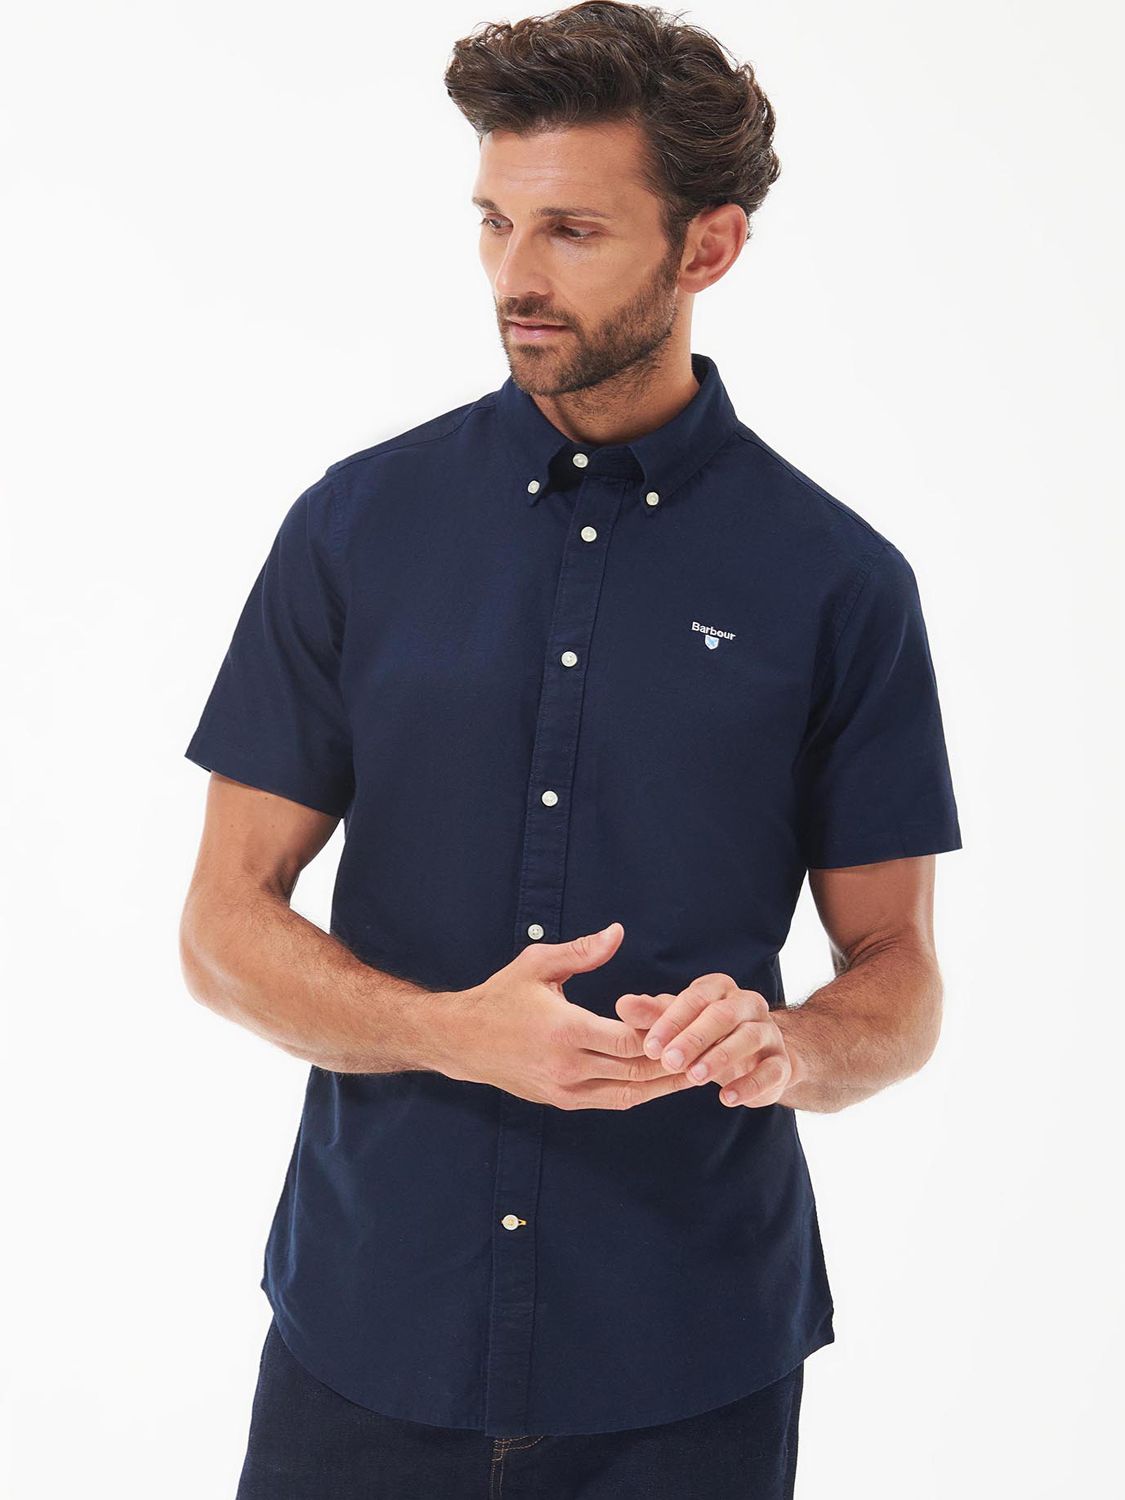 Barbour Oxford Cotton Short Sleeve Shirt, Navy, M